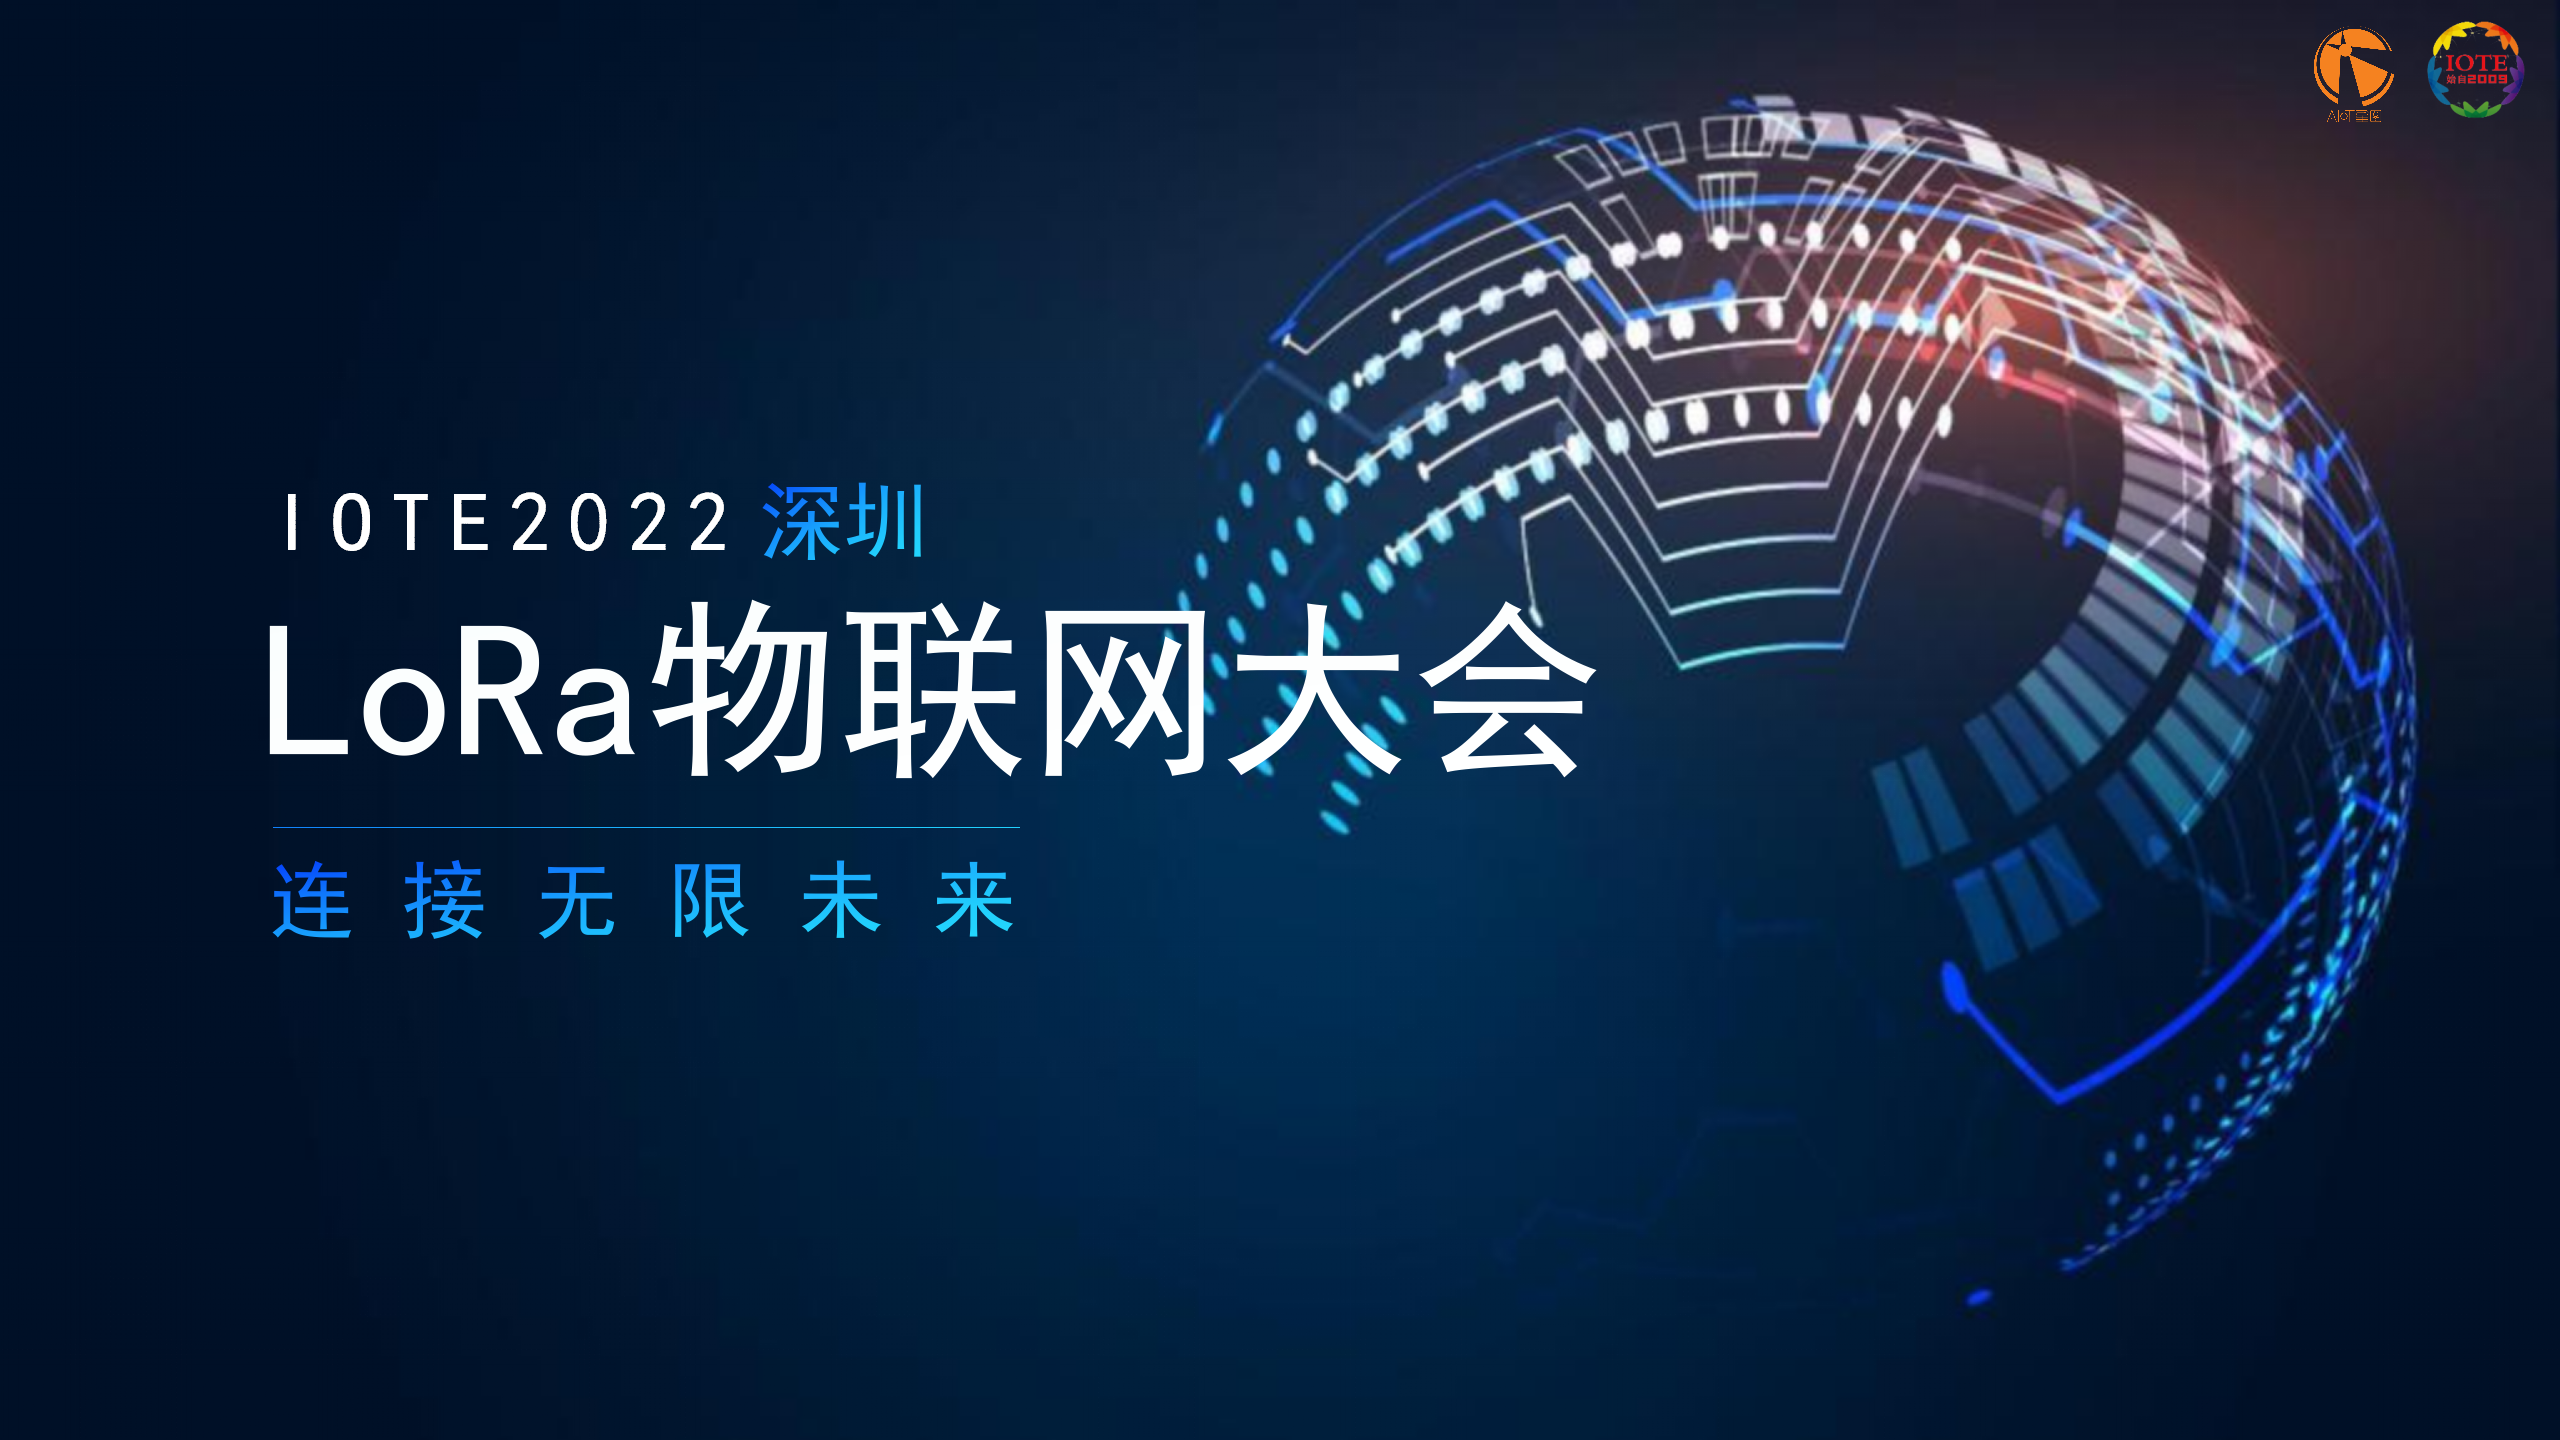 IOTE 2022深圳·LoRa物联网大会